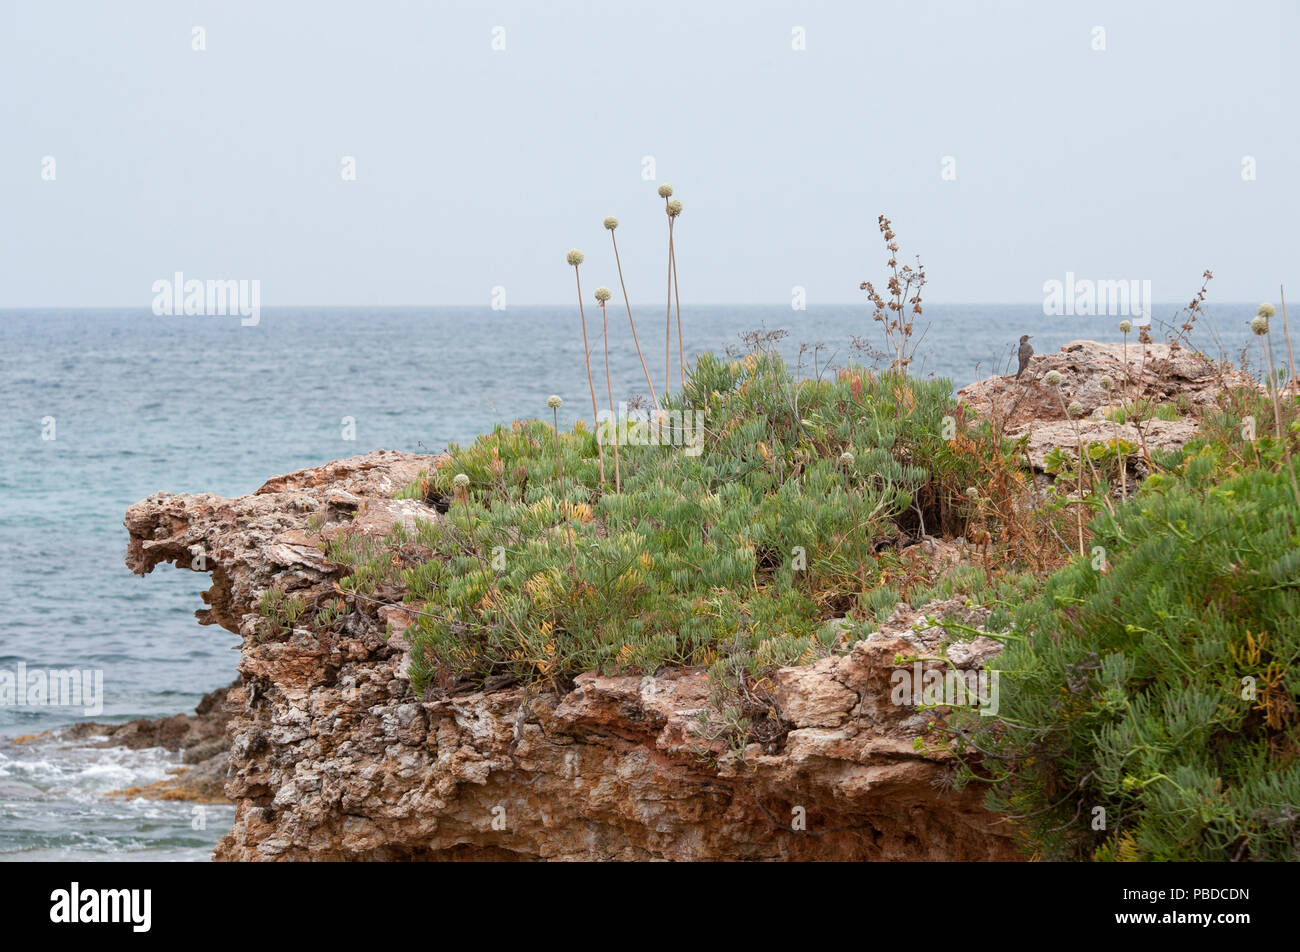 Ibizan coastal rocks with shrubs Rock Samphire and Allium, and female Blue Rock Thrush, Ibiza, Balearic Islands, Mediterranean Sea, Spain Stock Photo